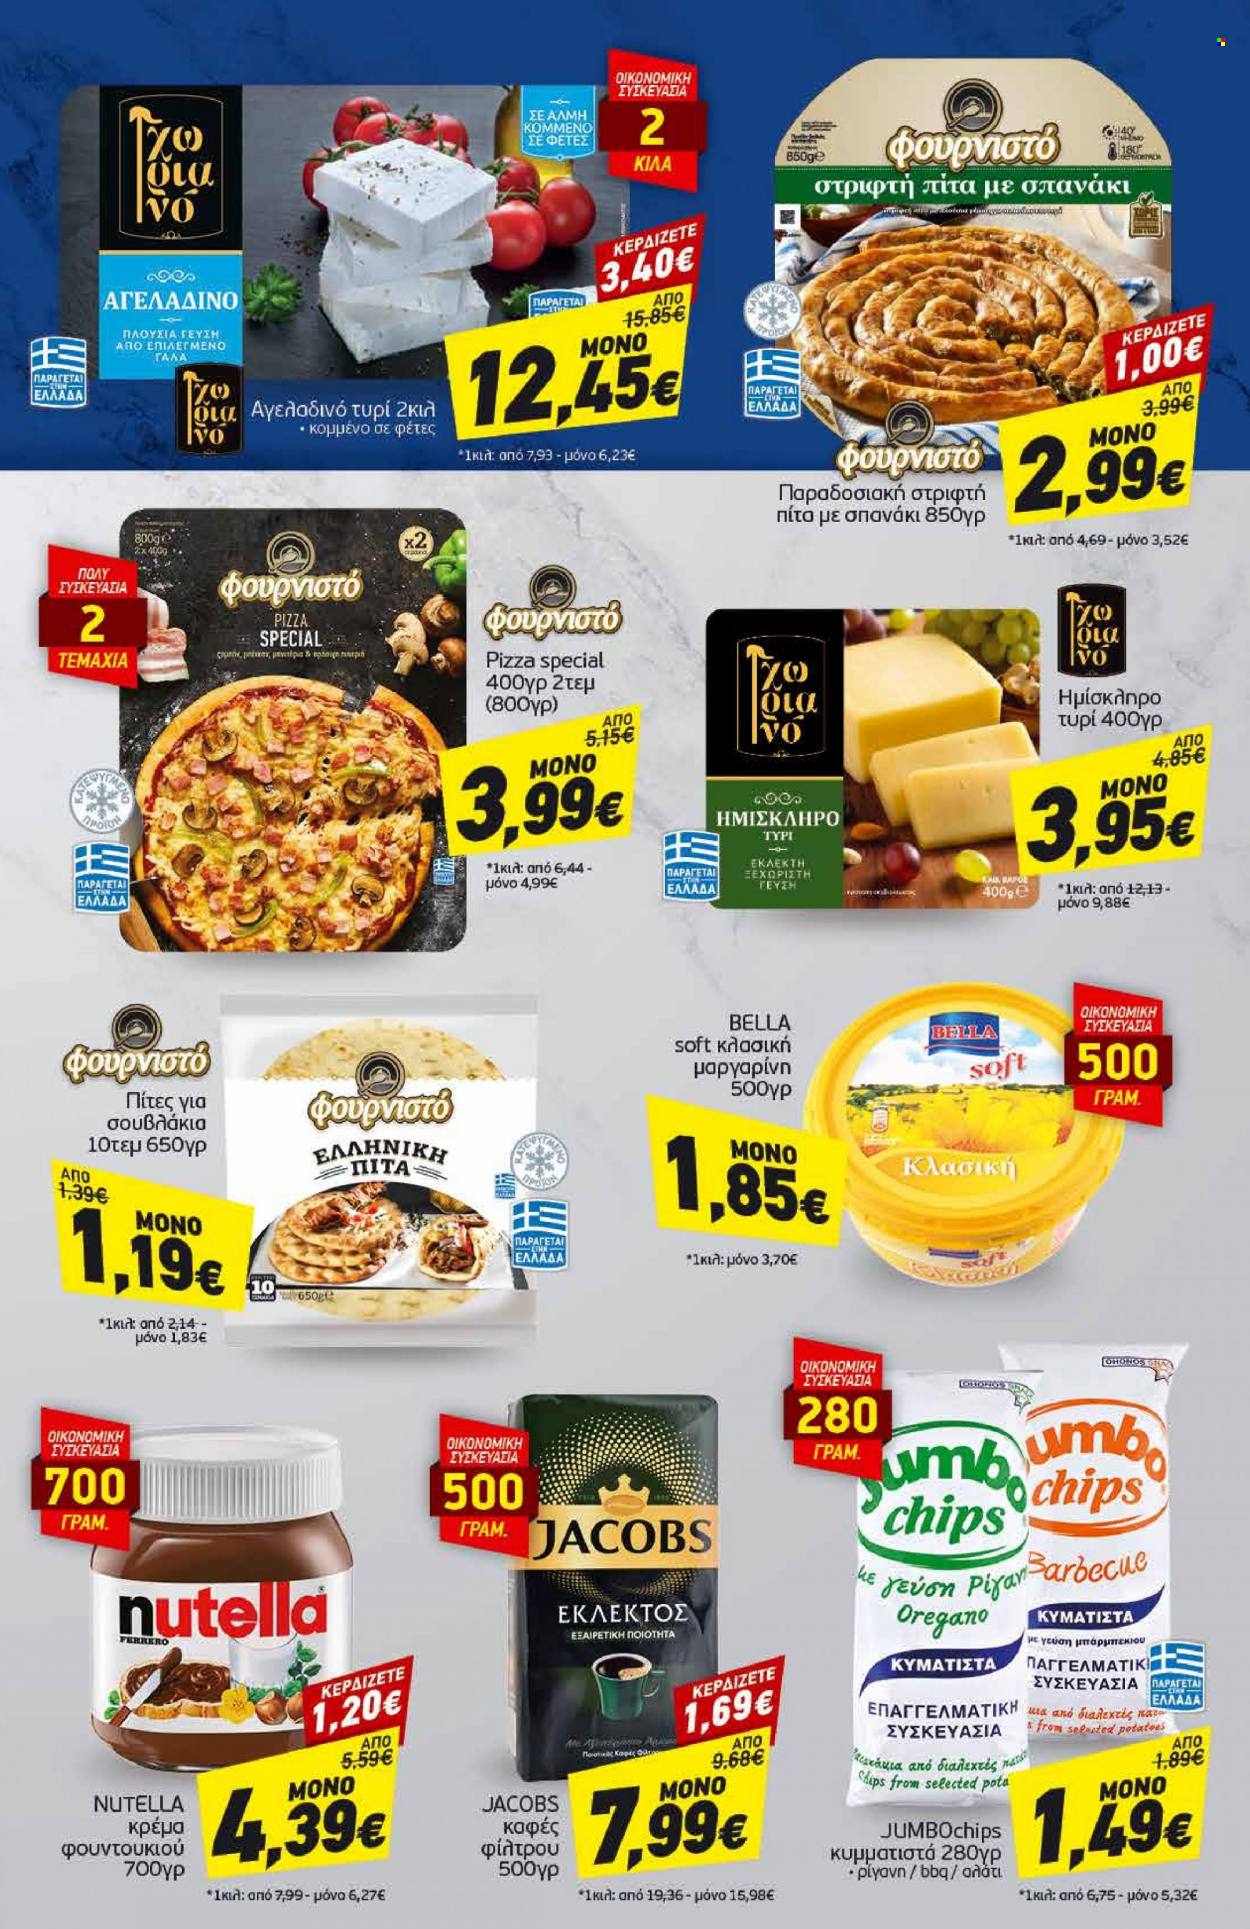 thumbnail - Φυλλάδια Discount Markt - 30.01.2023 - 04.02.2023 - Εκπτωτικά προϊόντα - πίτα, σουβλακια, ζαμπόν, γάλα, μαργαρίνη, Nutella, Jacobs, καφές. Σελίδα 17.